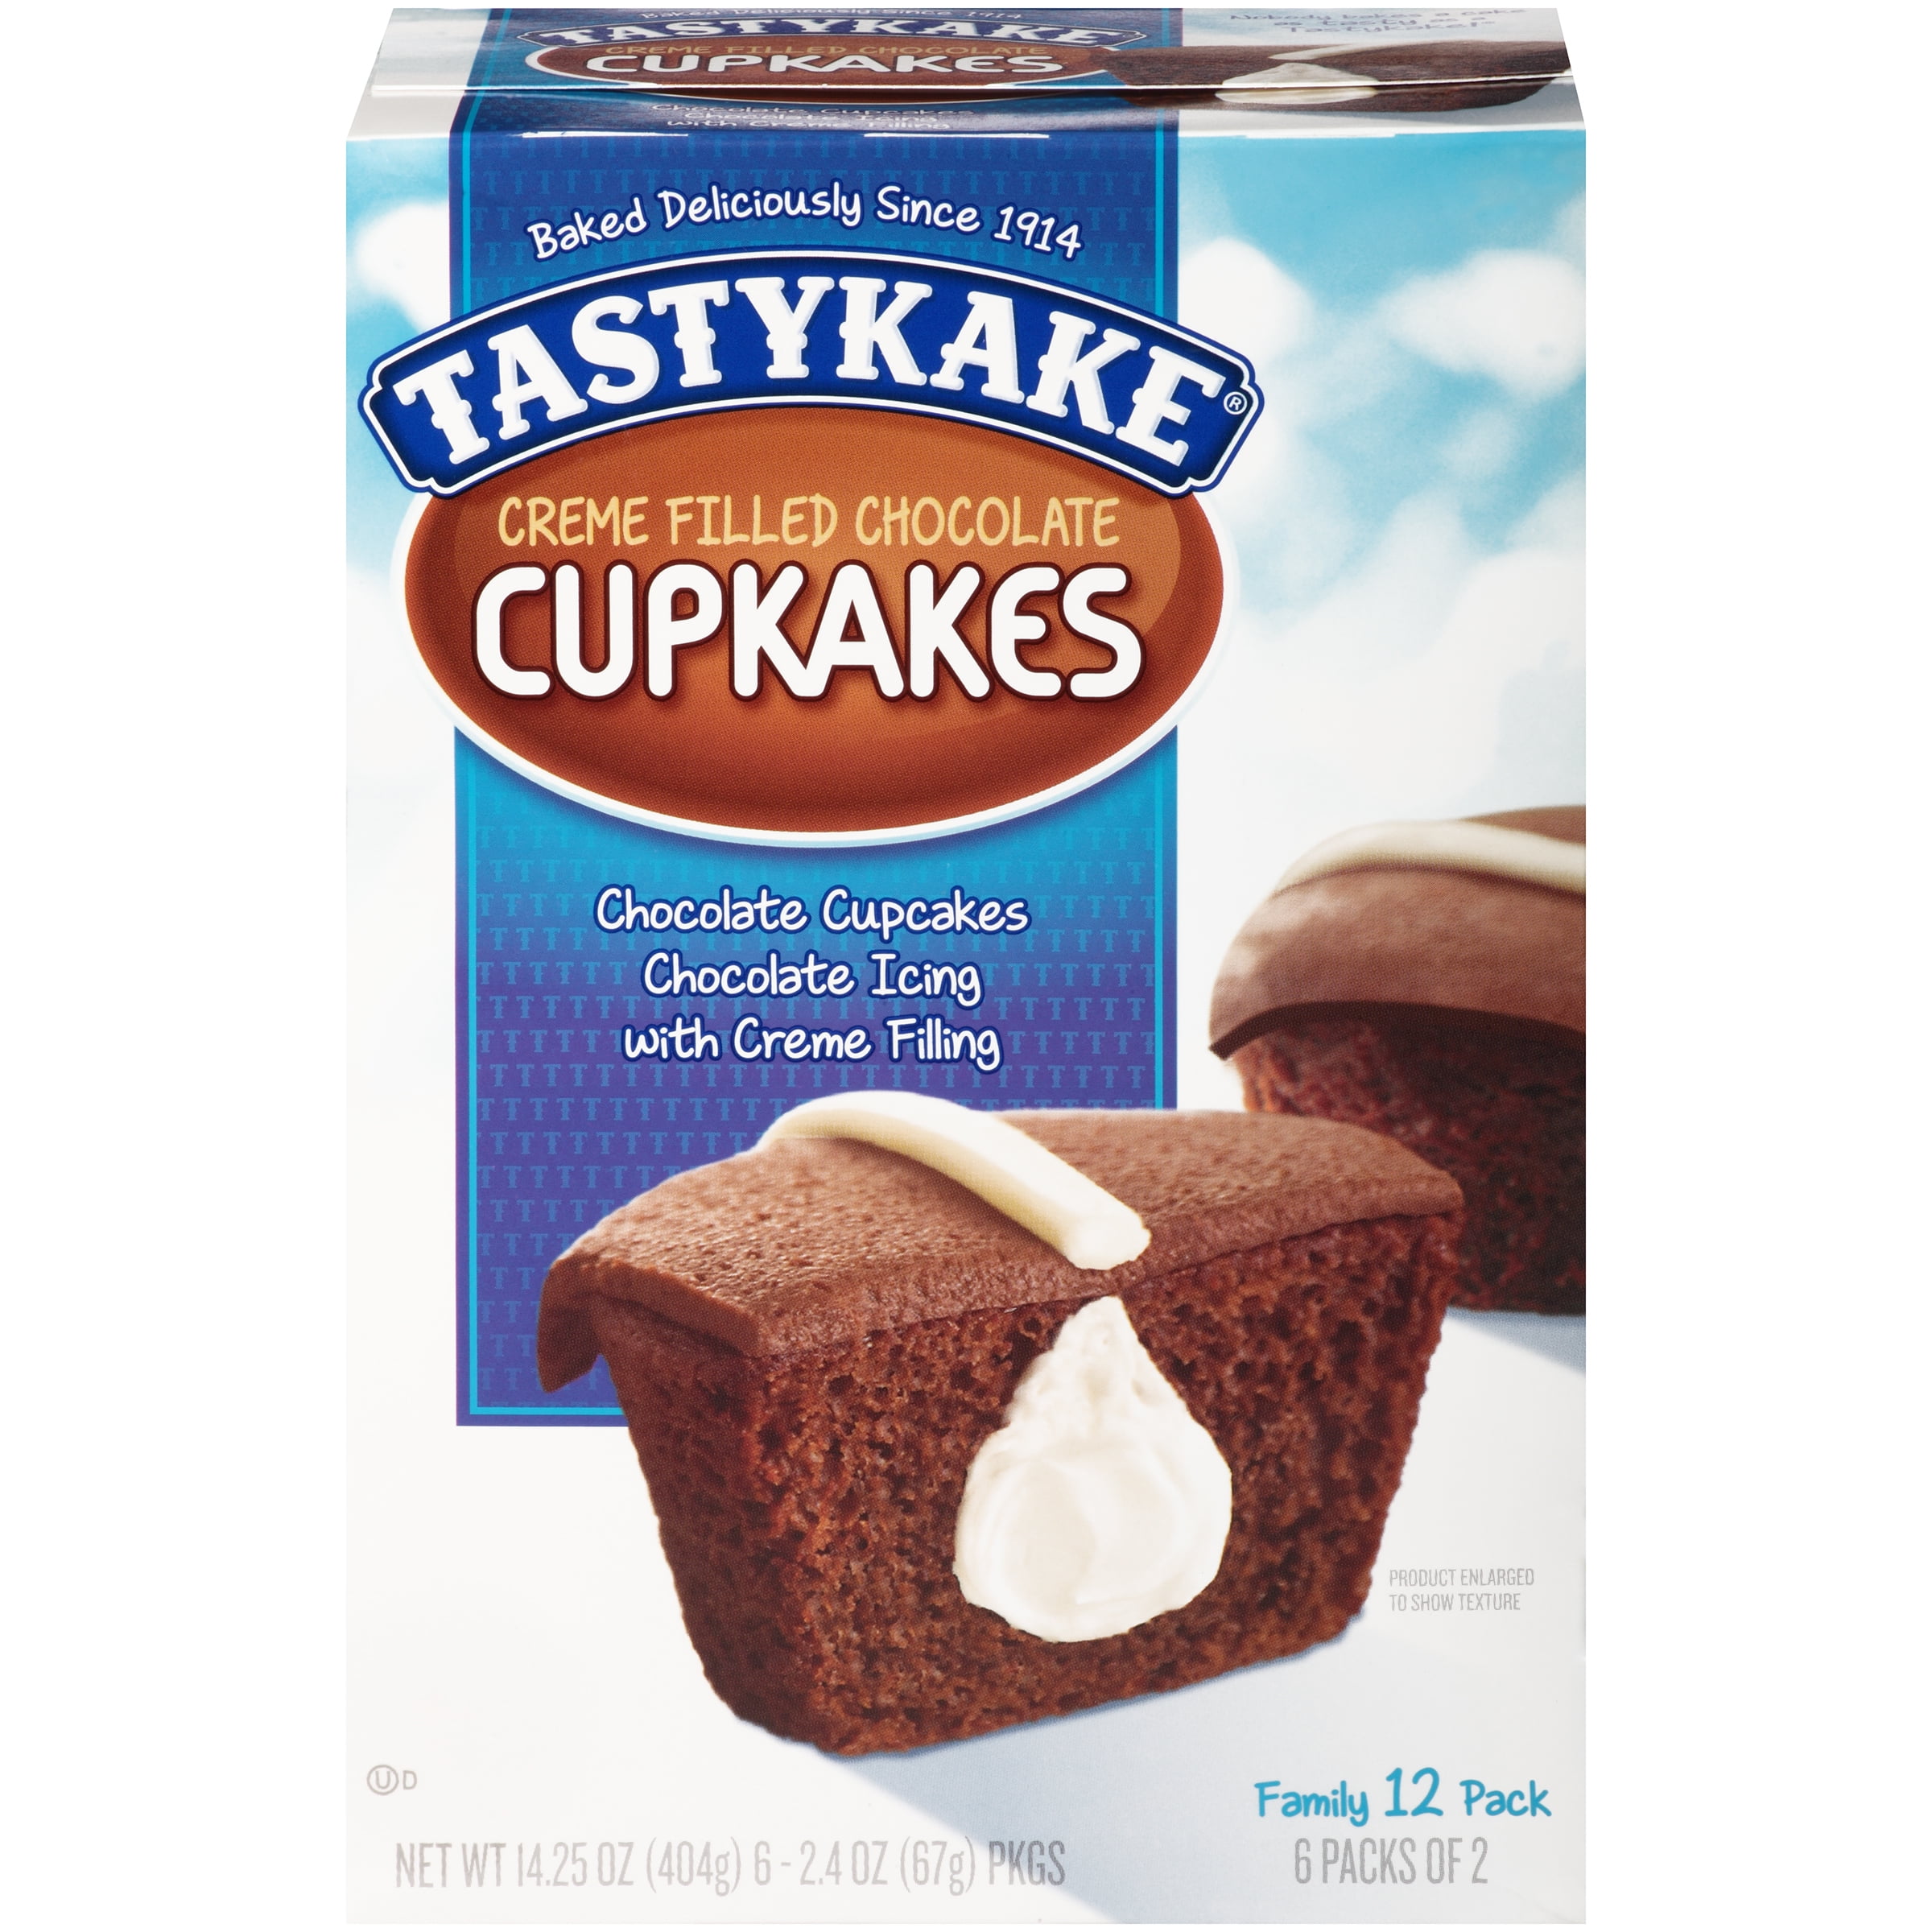 Tastykake Creme Filled Chocolate Cupcakes 6-2.4 oz. Packs